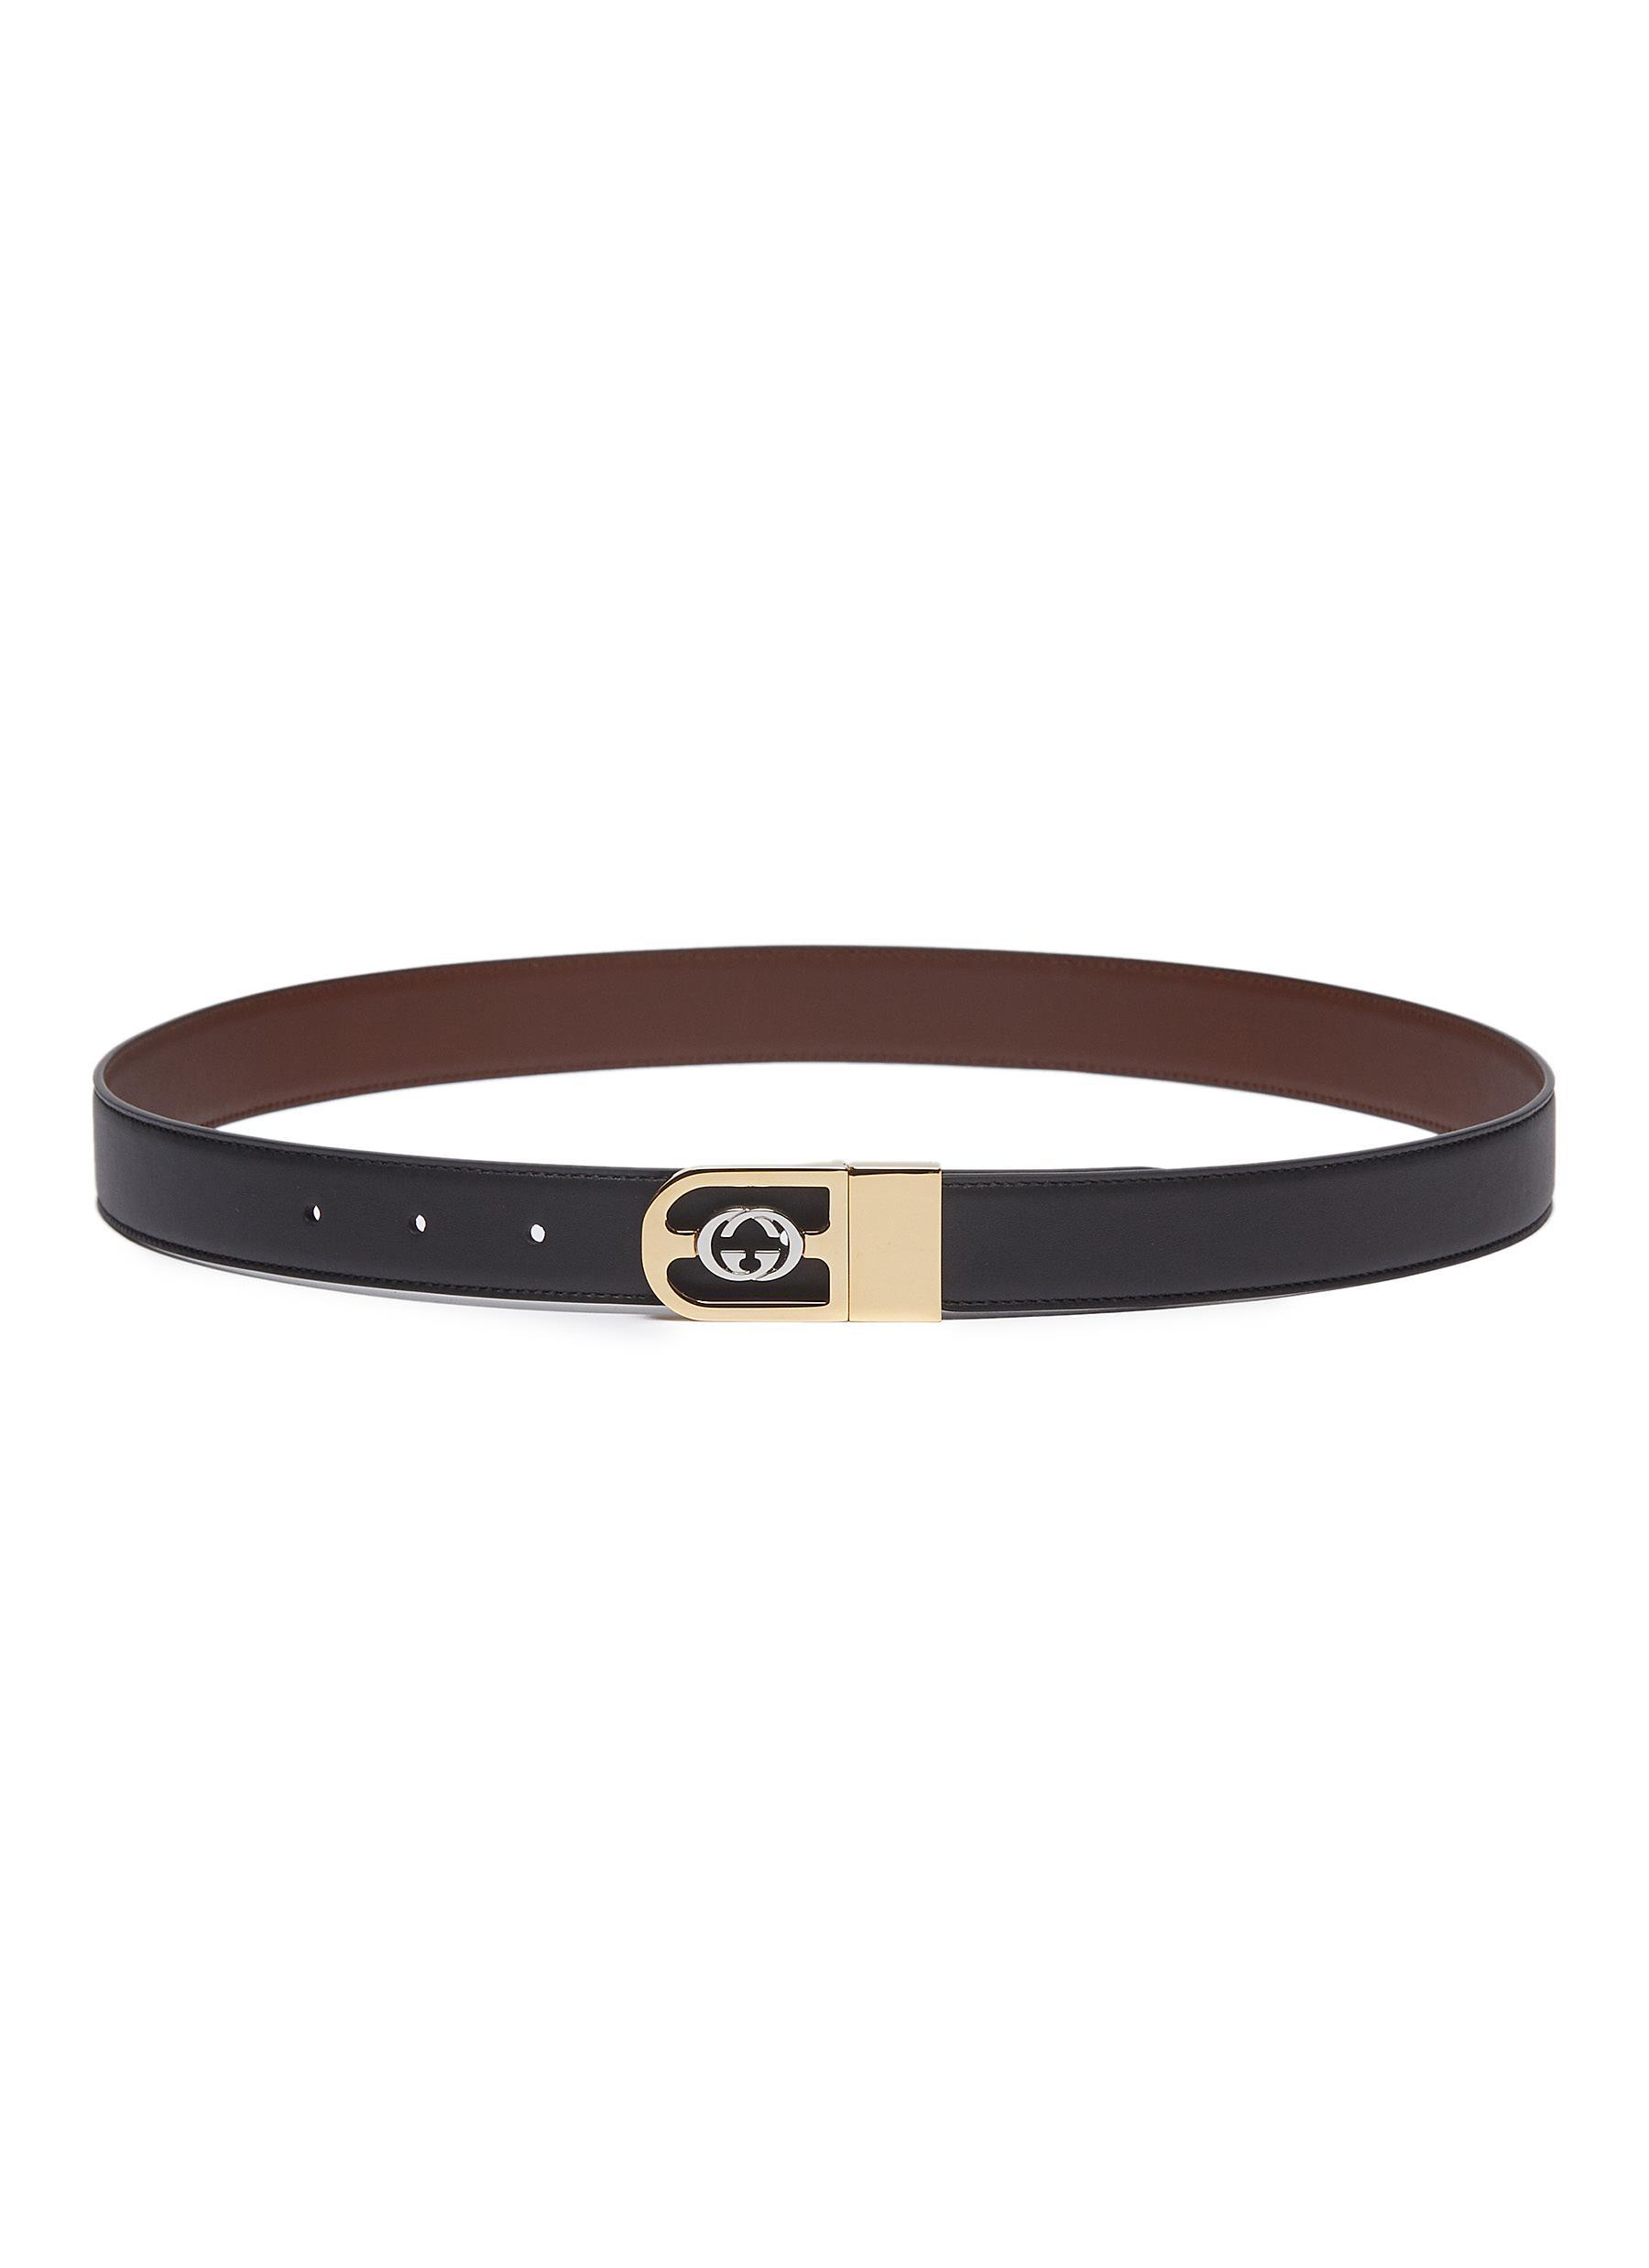 Gucci Reversible GG Logo Buckle Leather Belt in Black for Men - Lyst